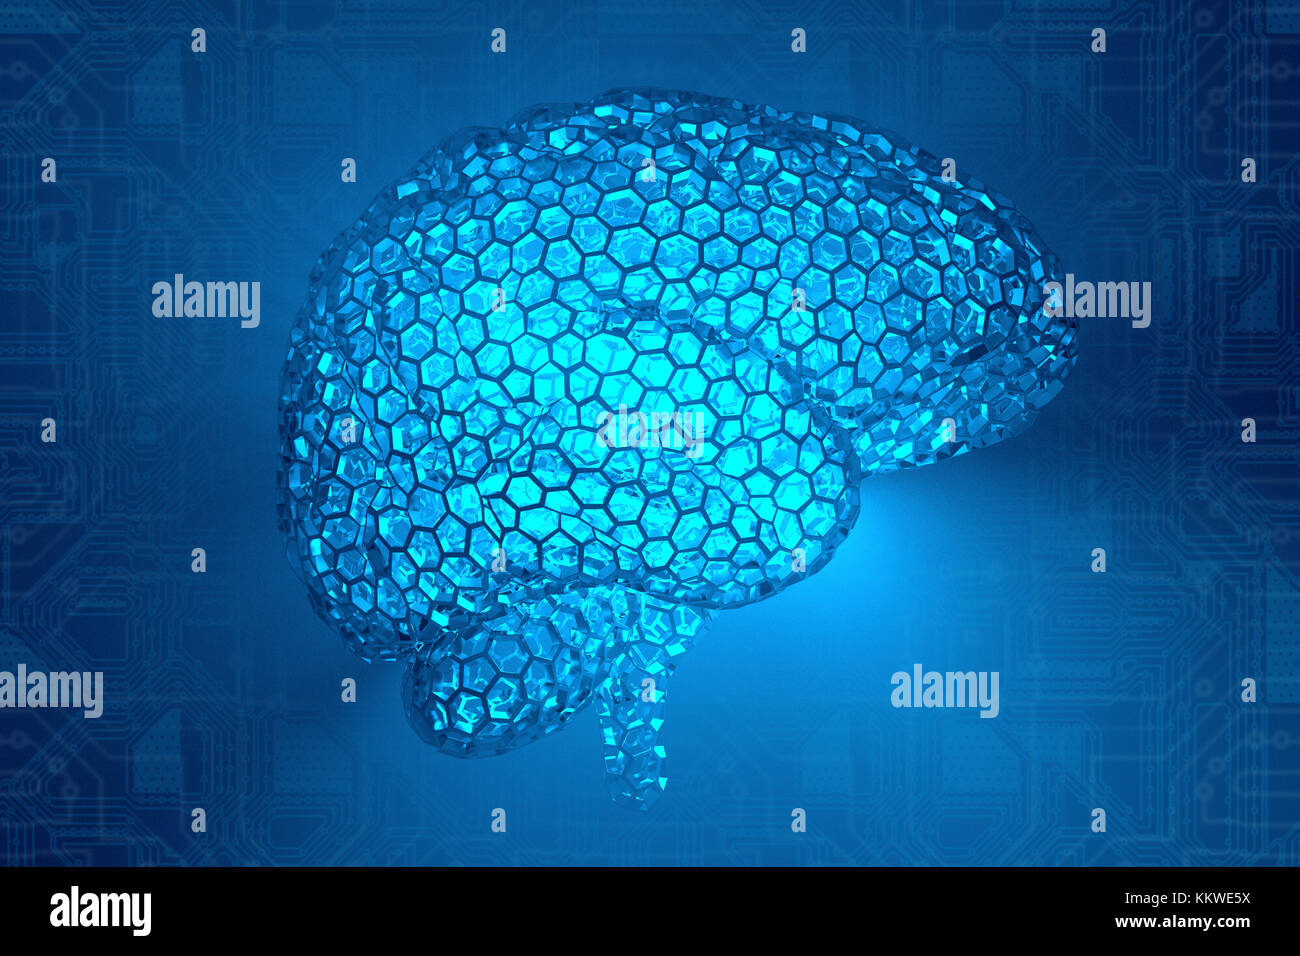 Artificial brain, conceptual computer illustration. Stock Photo